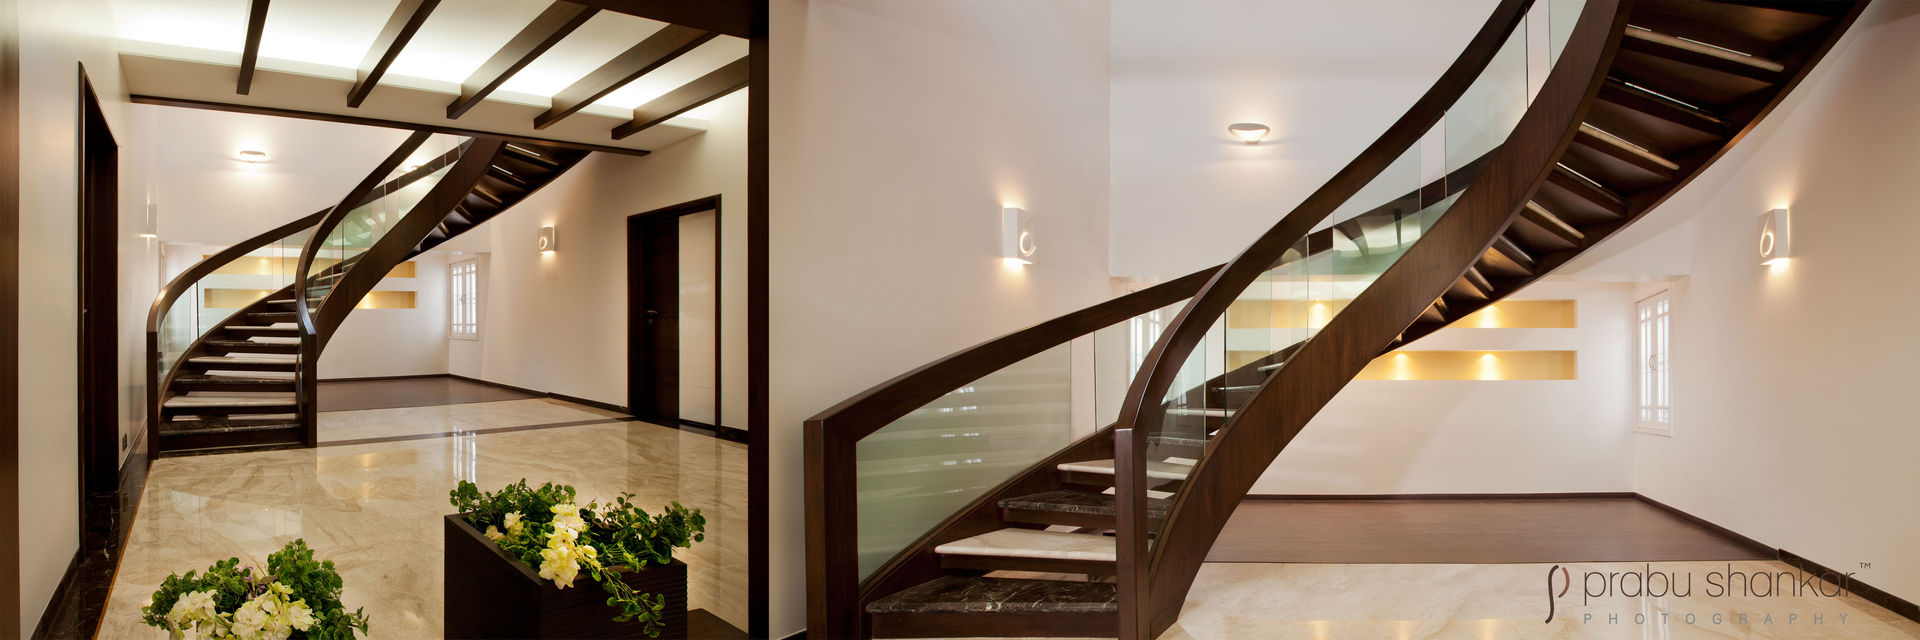 Residential, Prabu Shankar Photography Prabu Shankar Photography Pasillos, vestíbulos y escaleras modernos